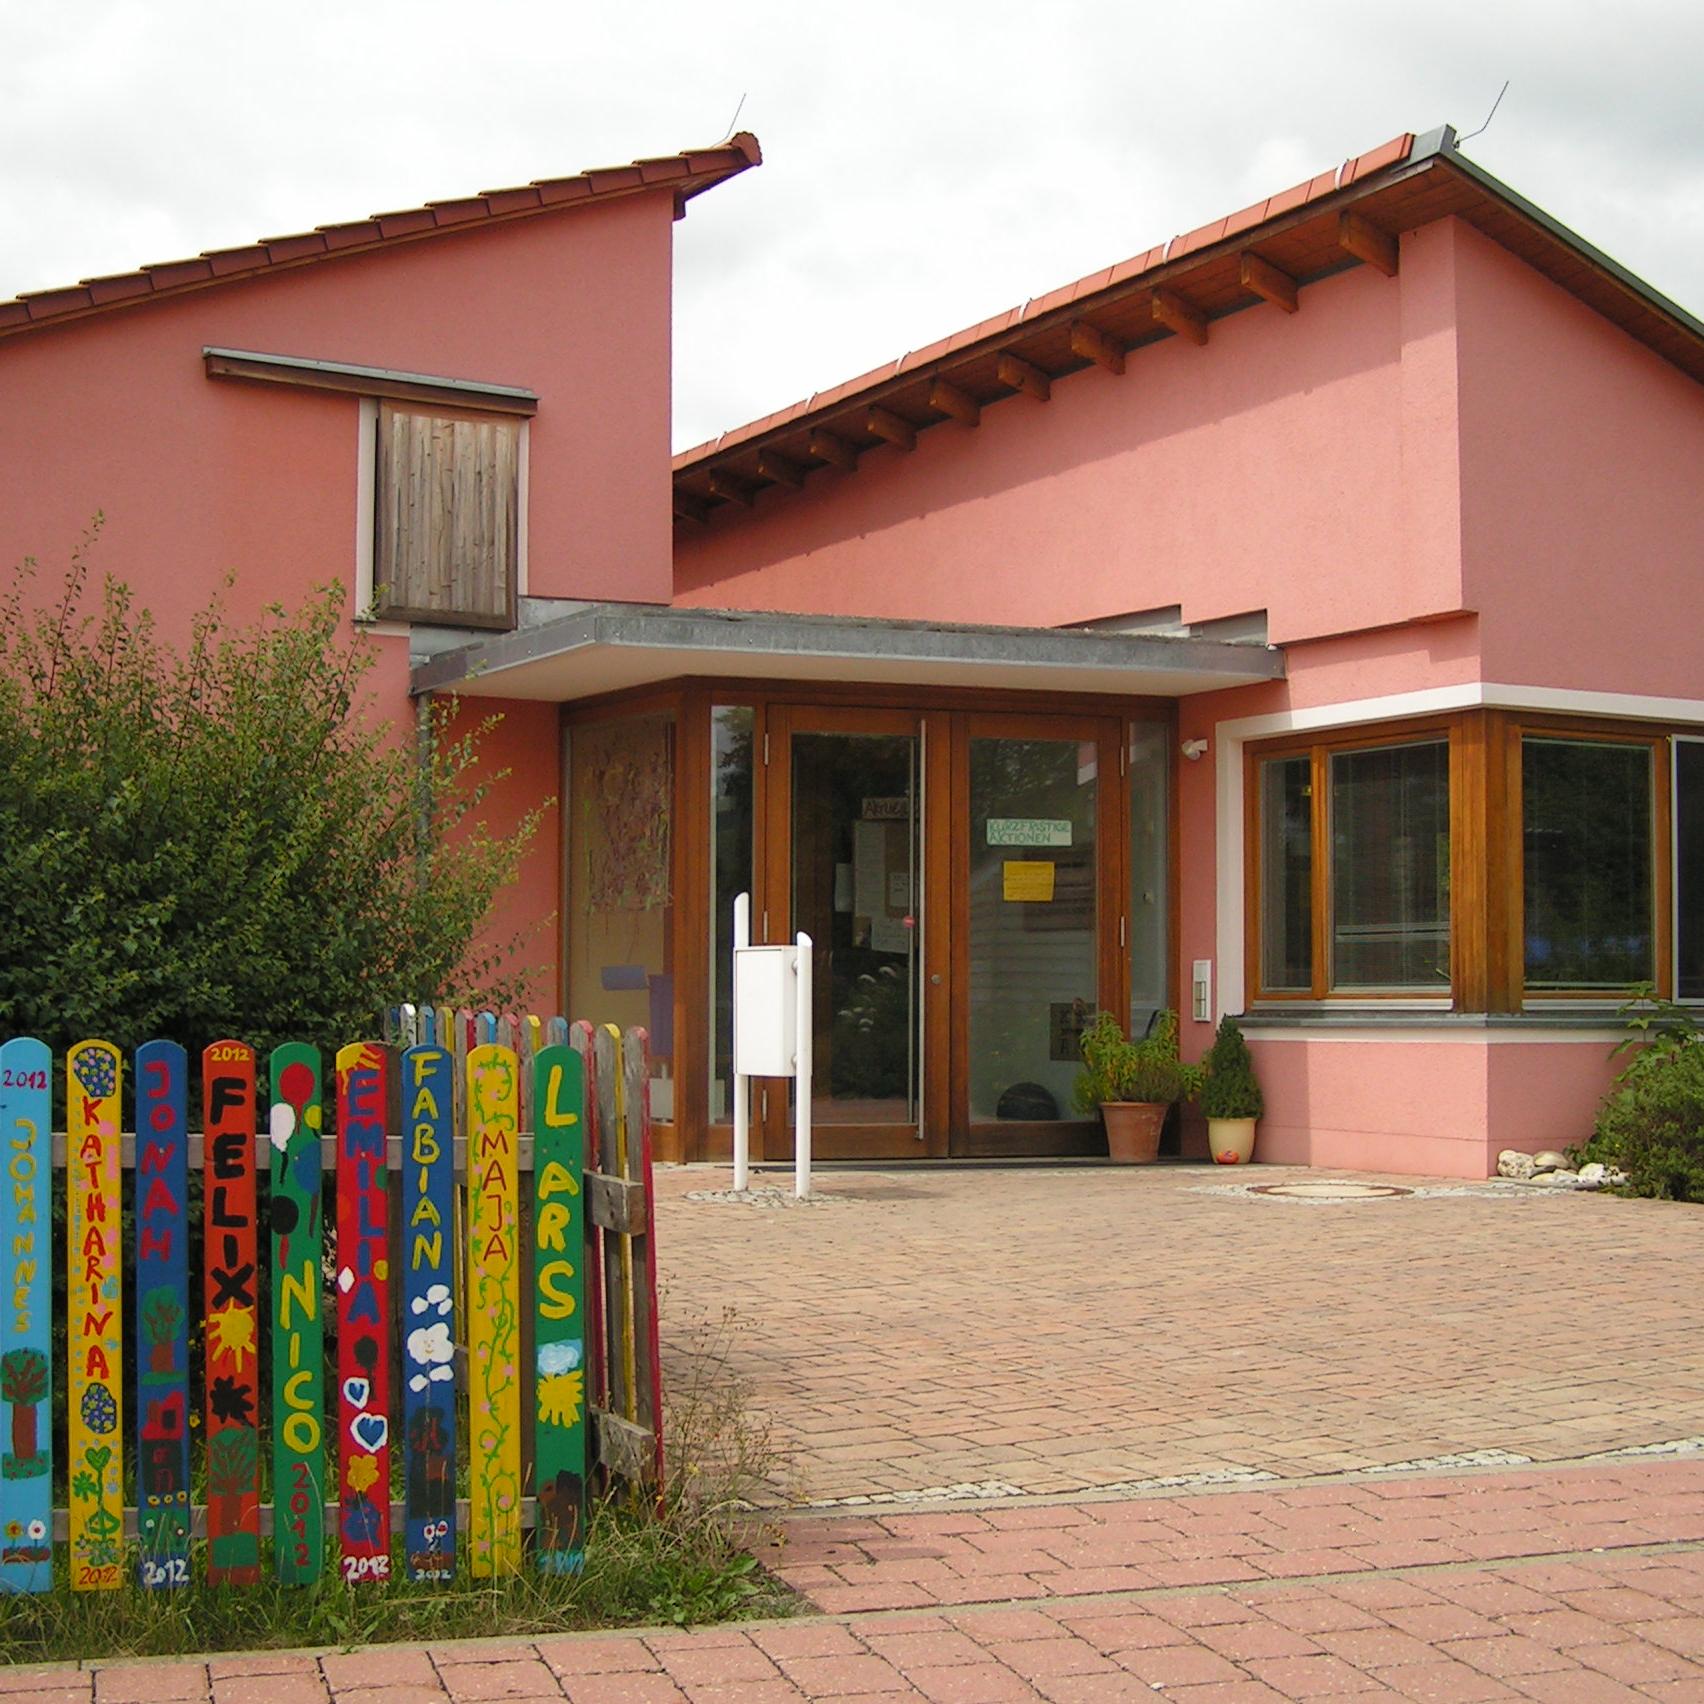 Eingang des Kindergartens in Hetzles